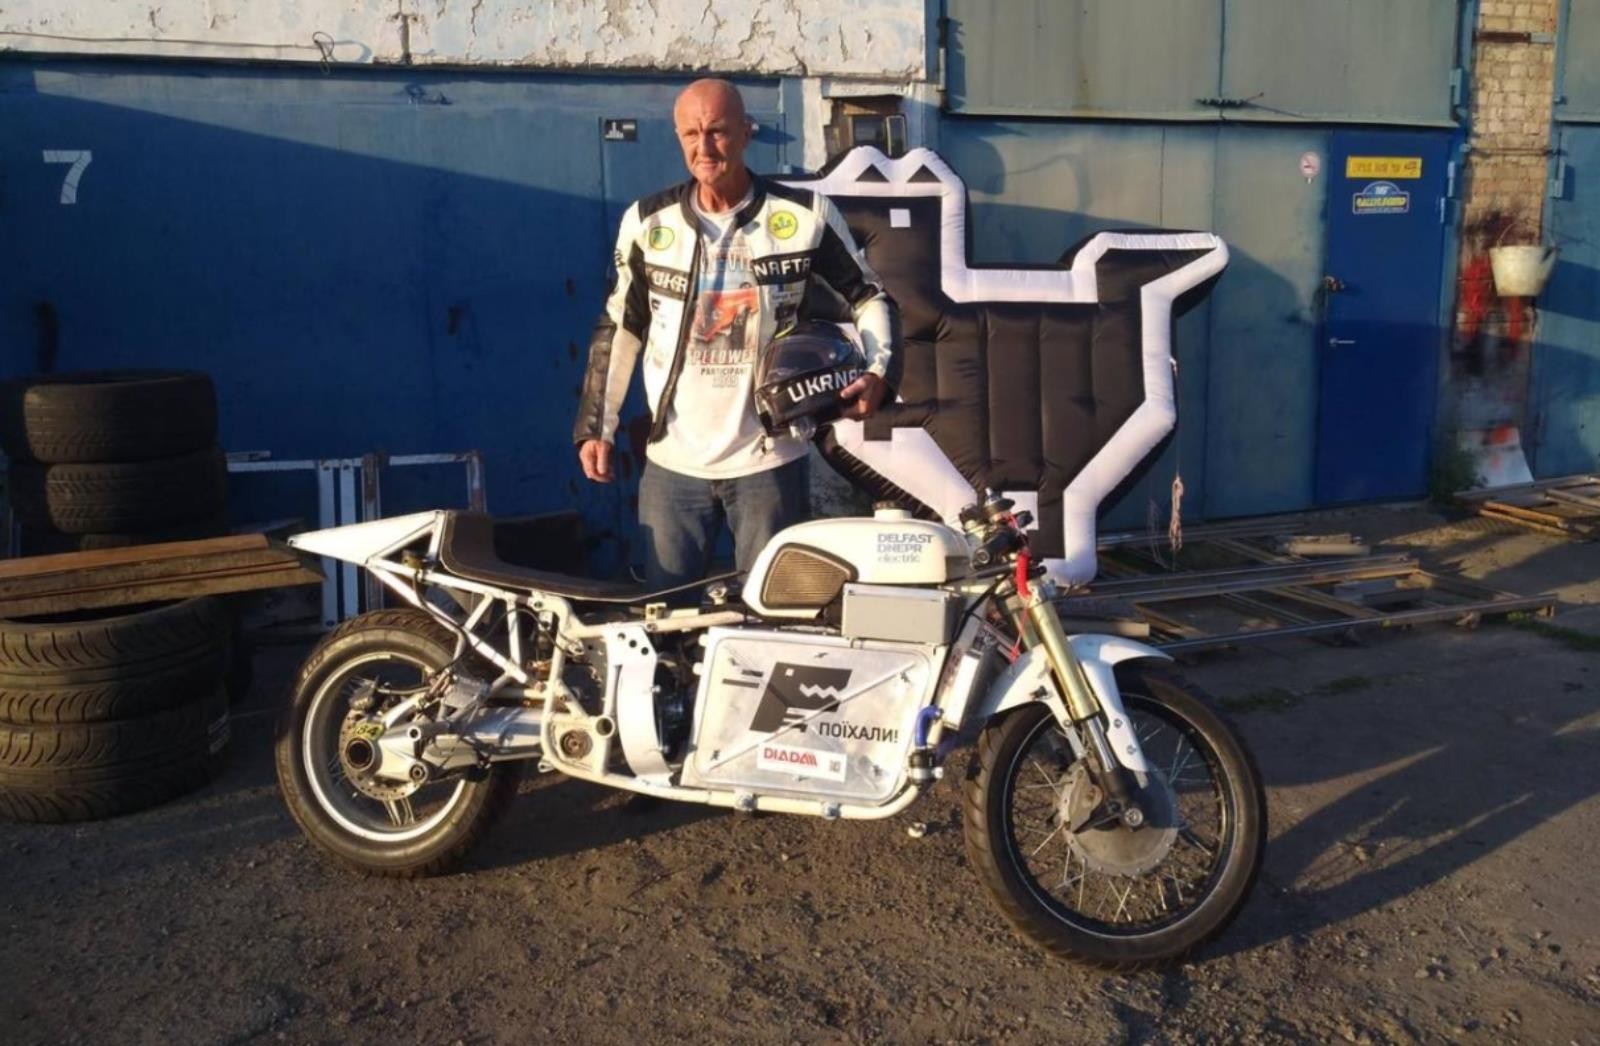 Elektryczny motocykl Delfast Dnepr,Delfast Dnepr,